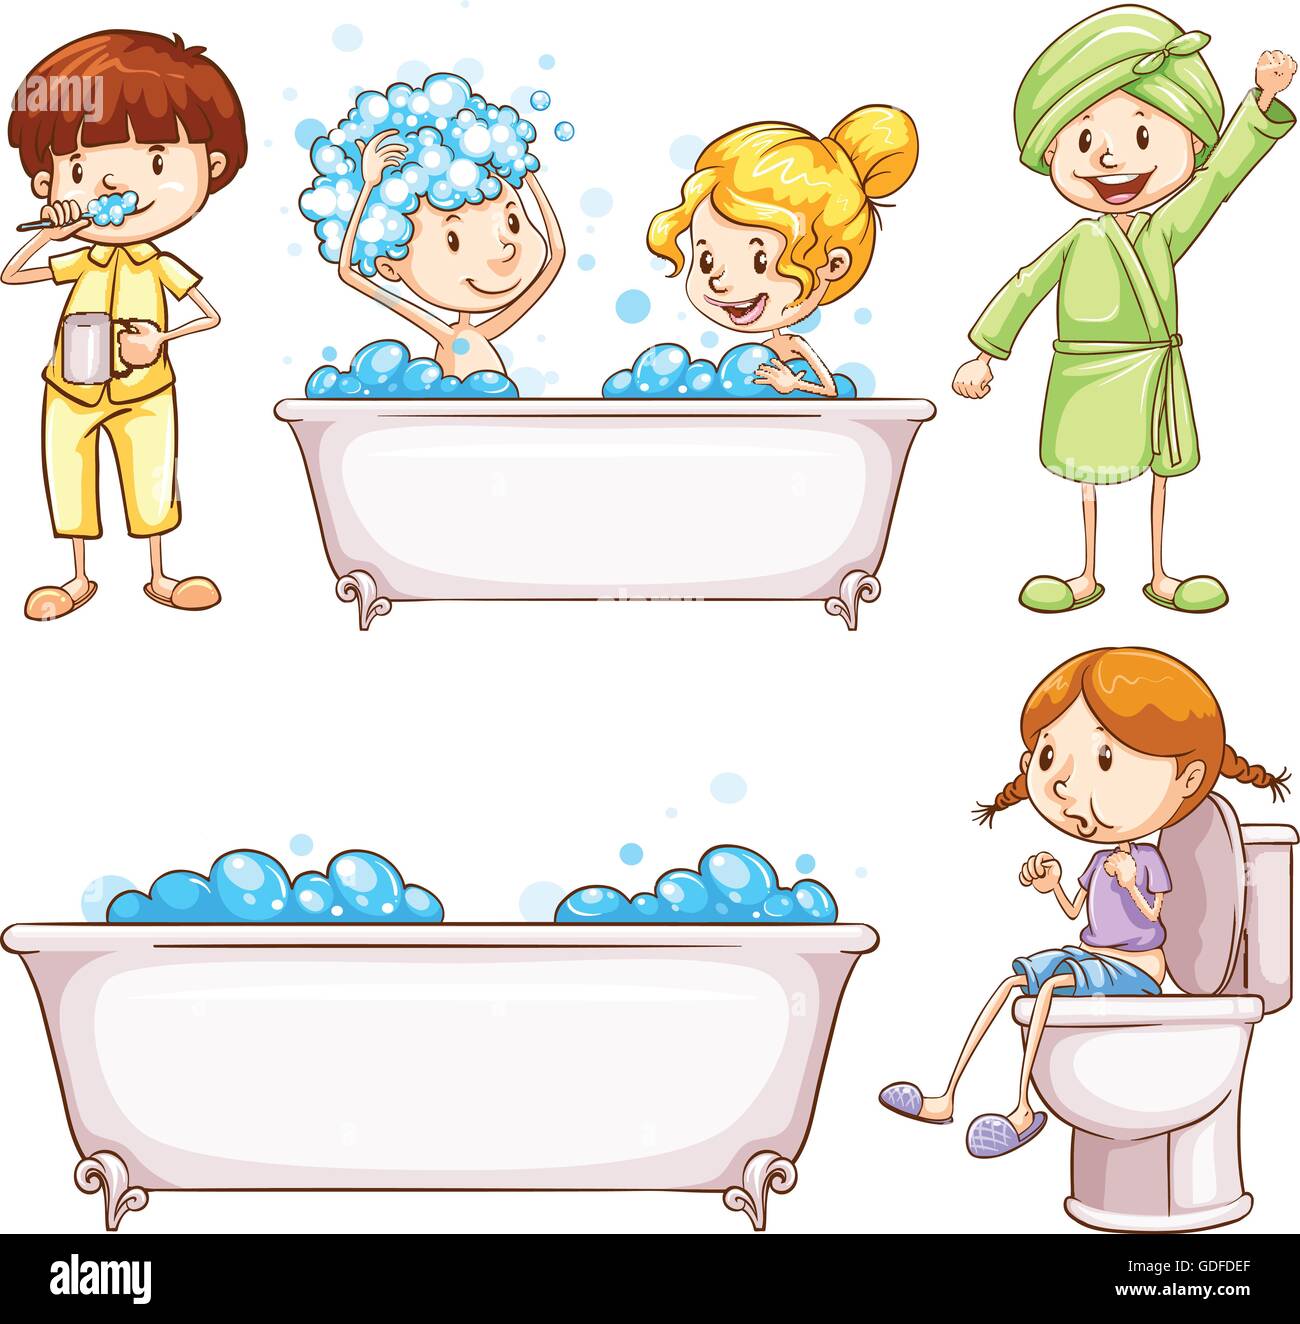 Children brushing teeth and taking bath illustration Stock Vector Image ...